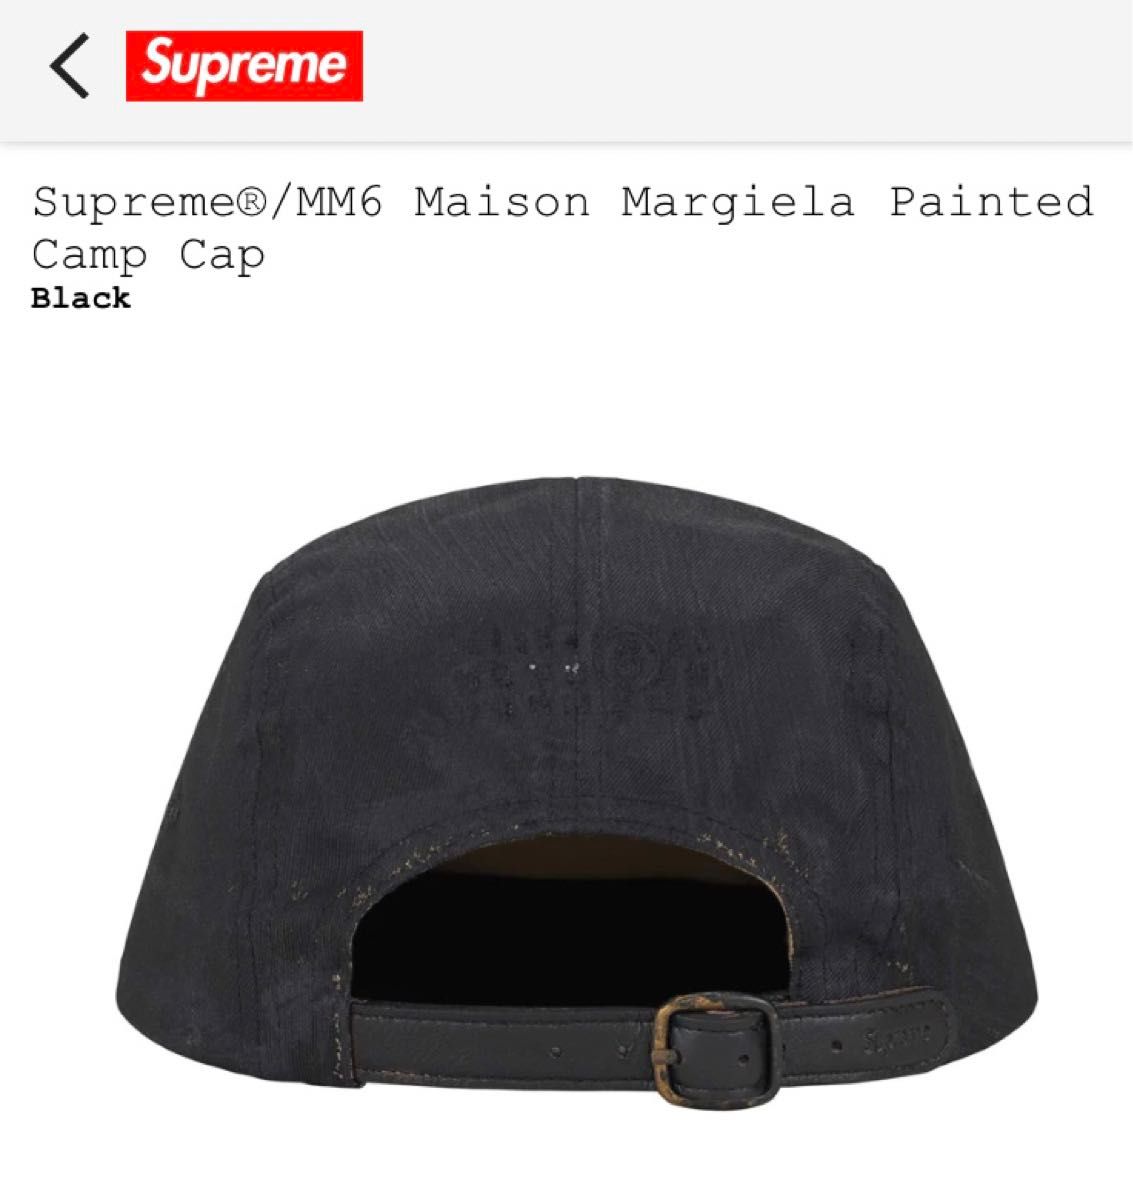 Supreme x MM6 Maison Margiela Painted Camp Cap Black シュプリーム マルジェラ